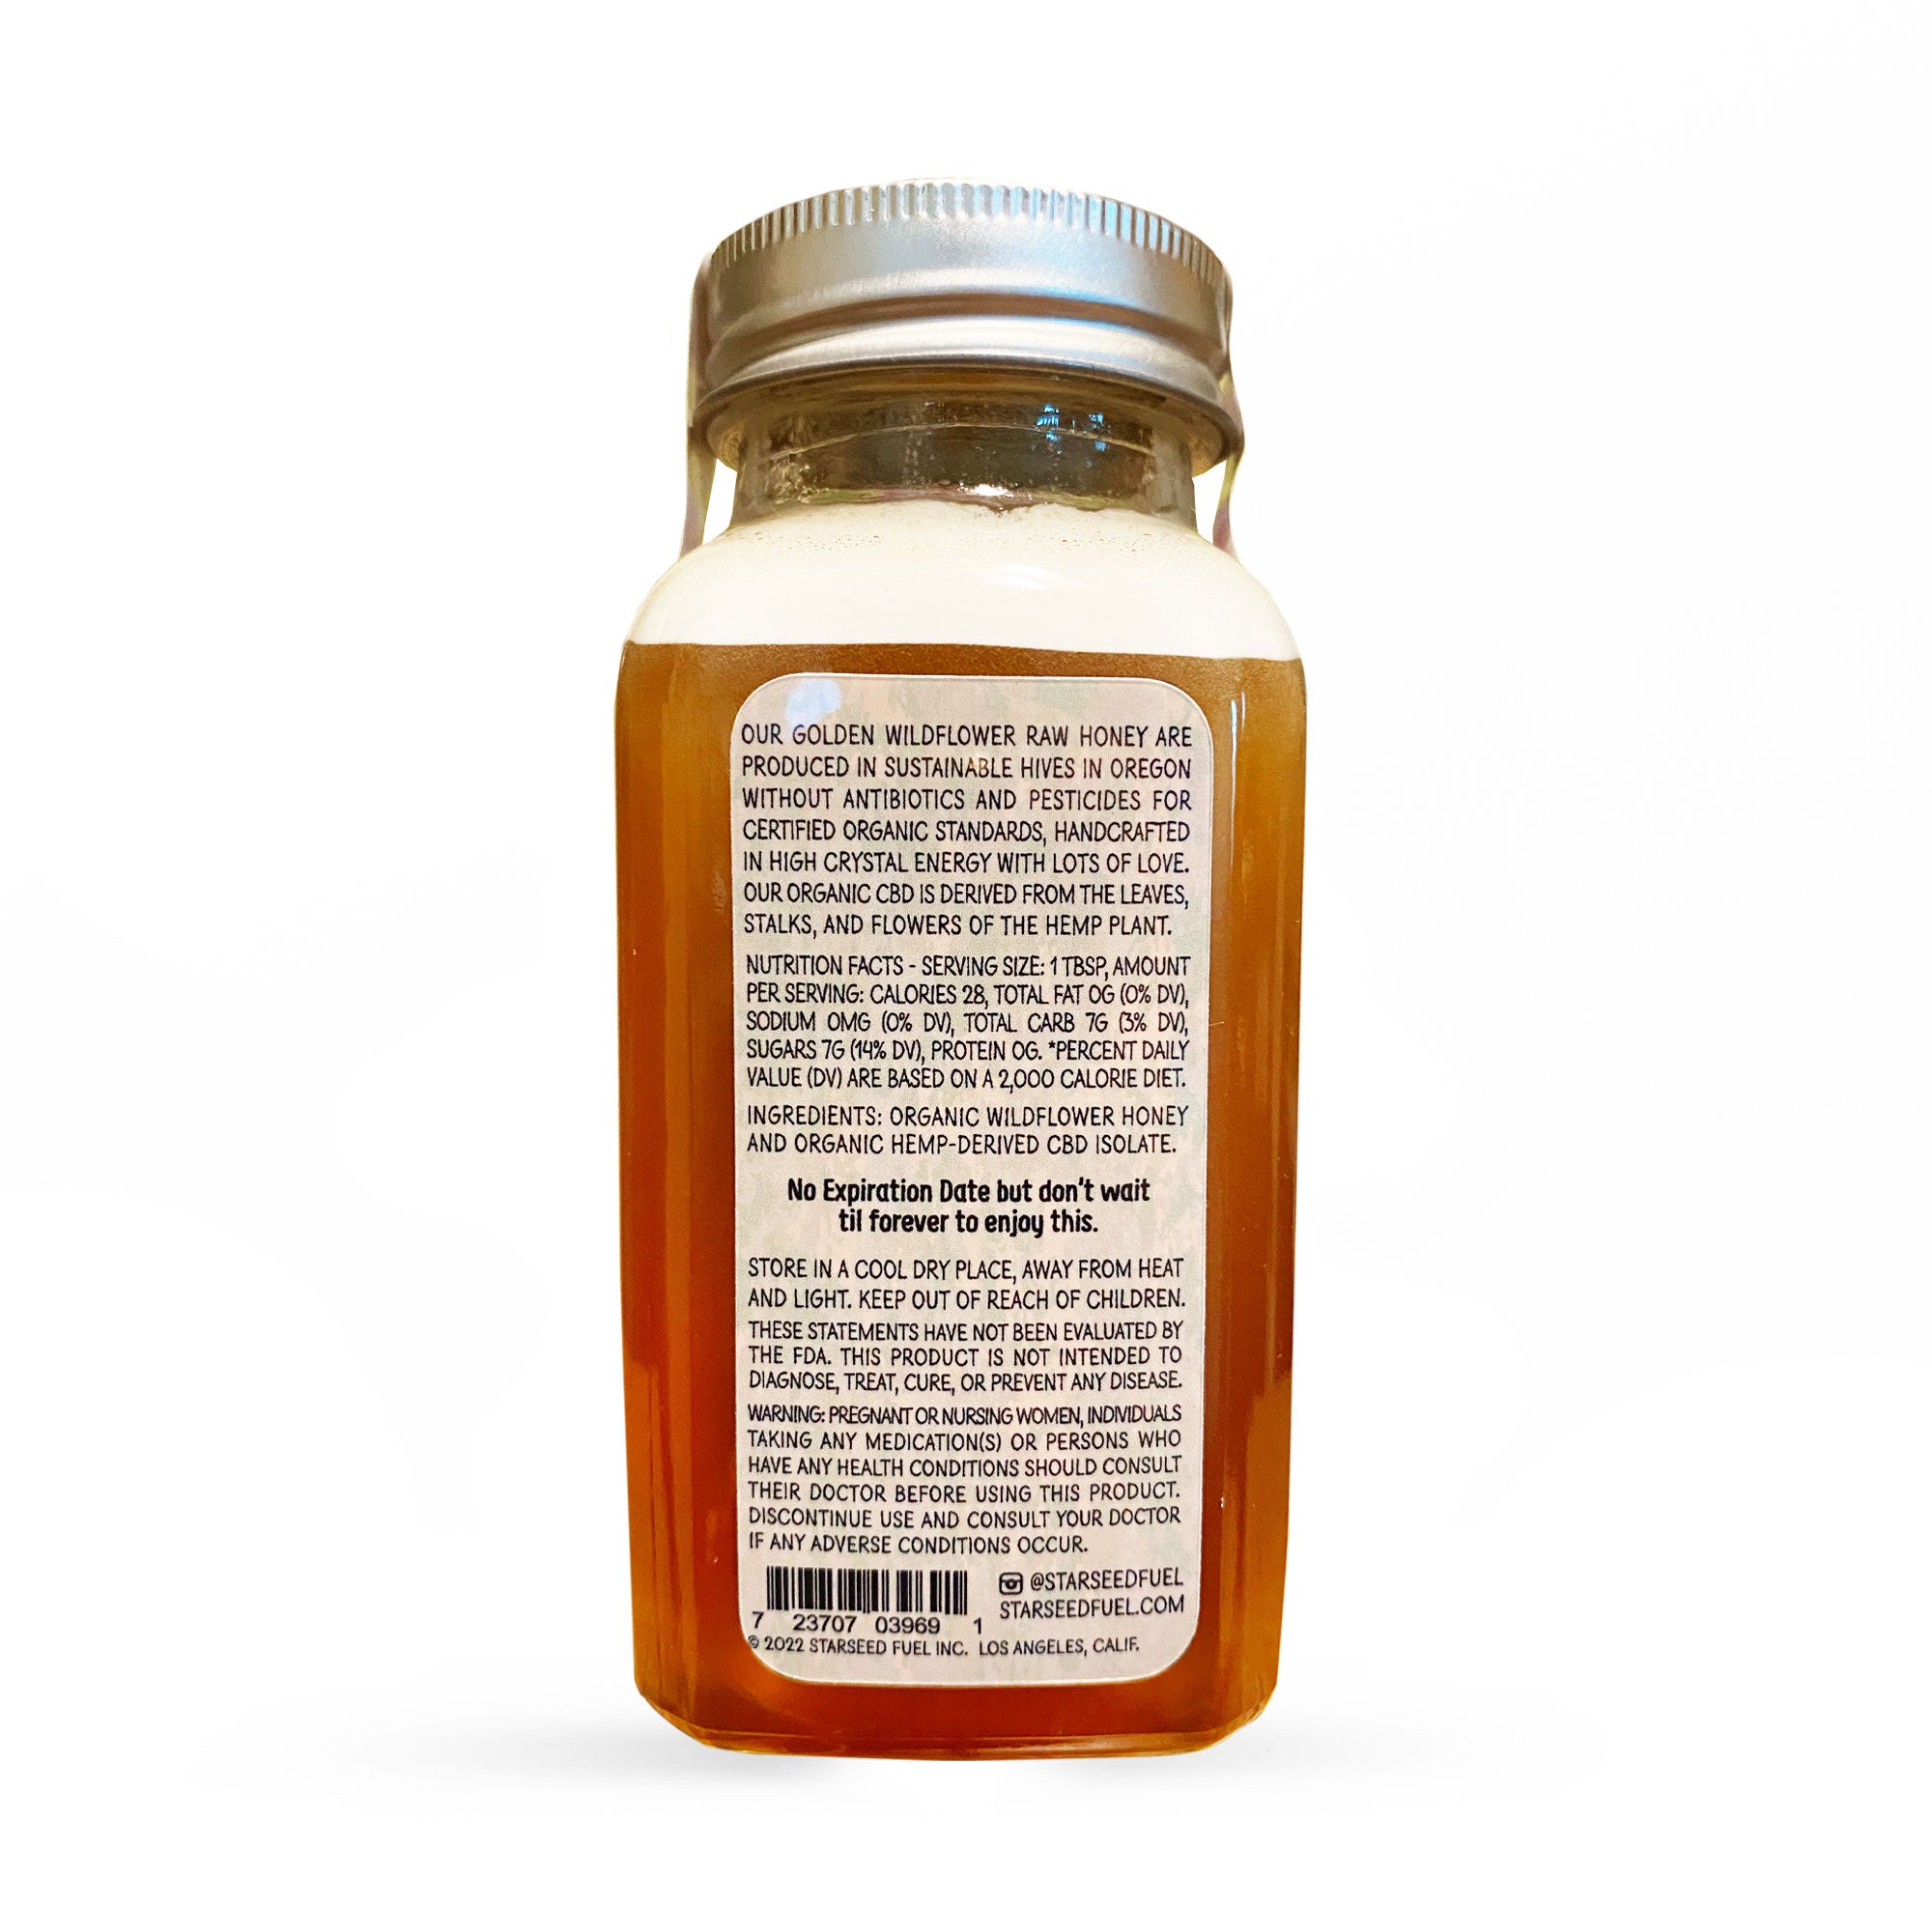 Starseed Fuel Golden Wildflower Honey with 444mg CBD